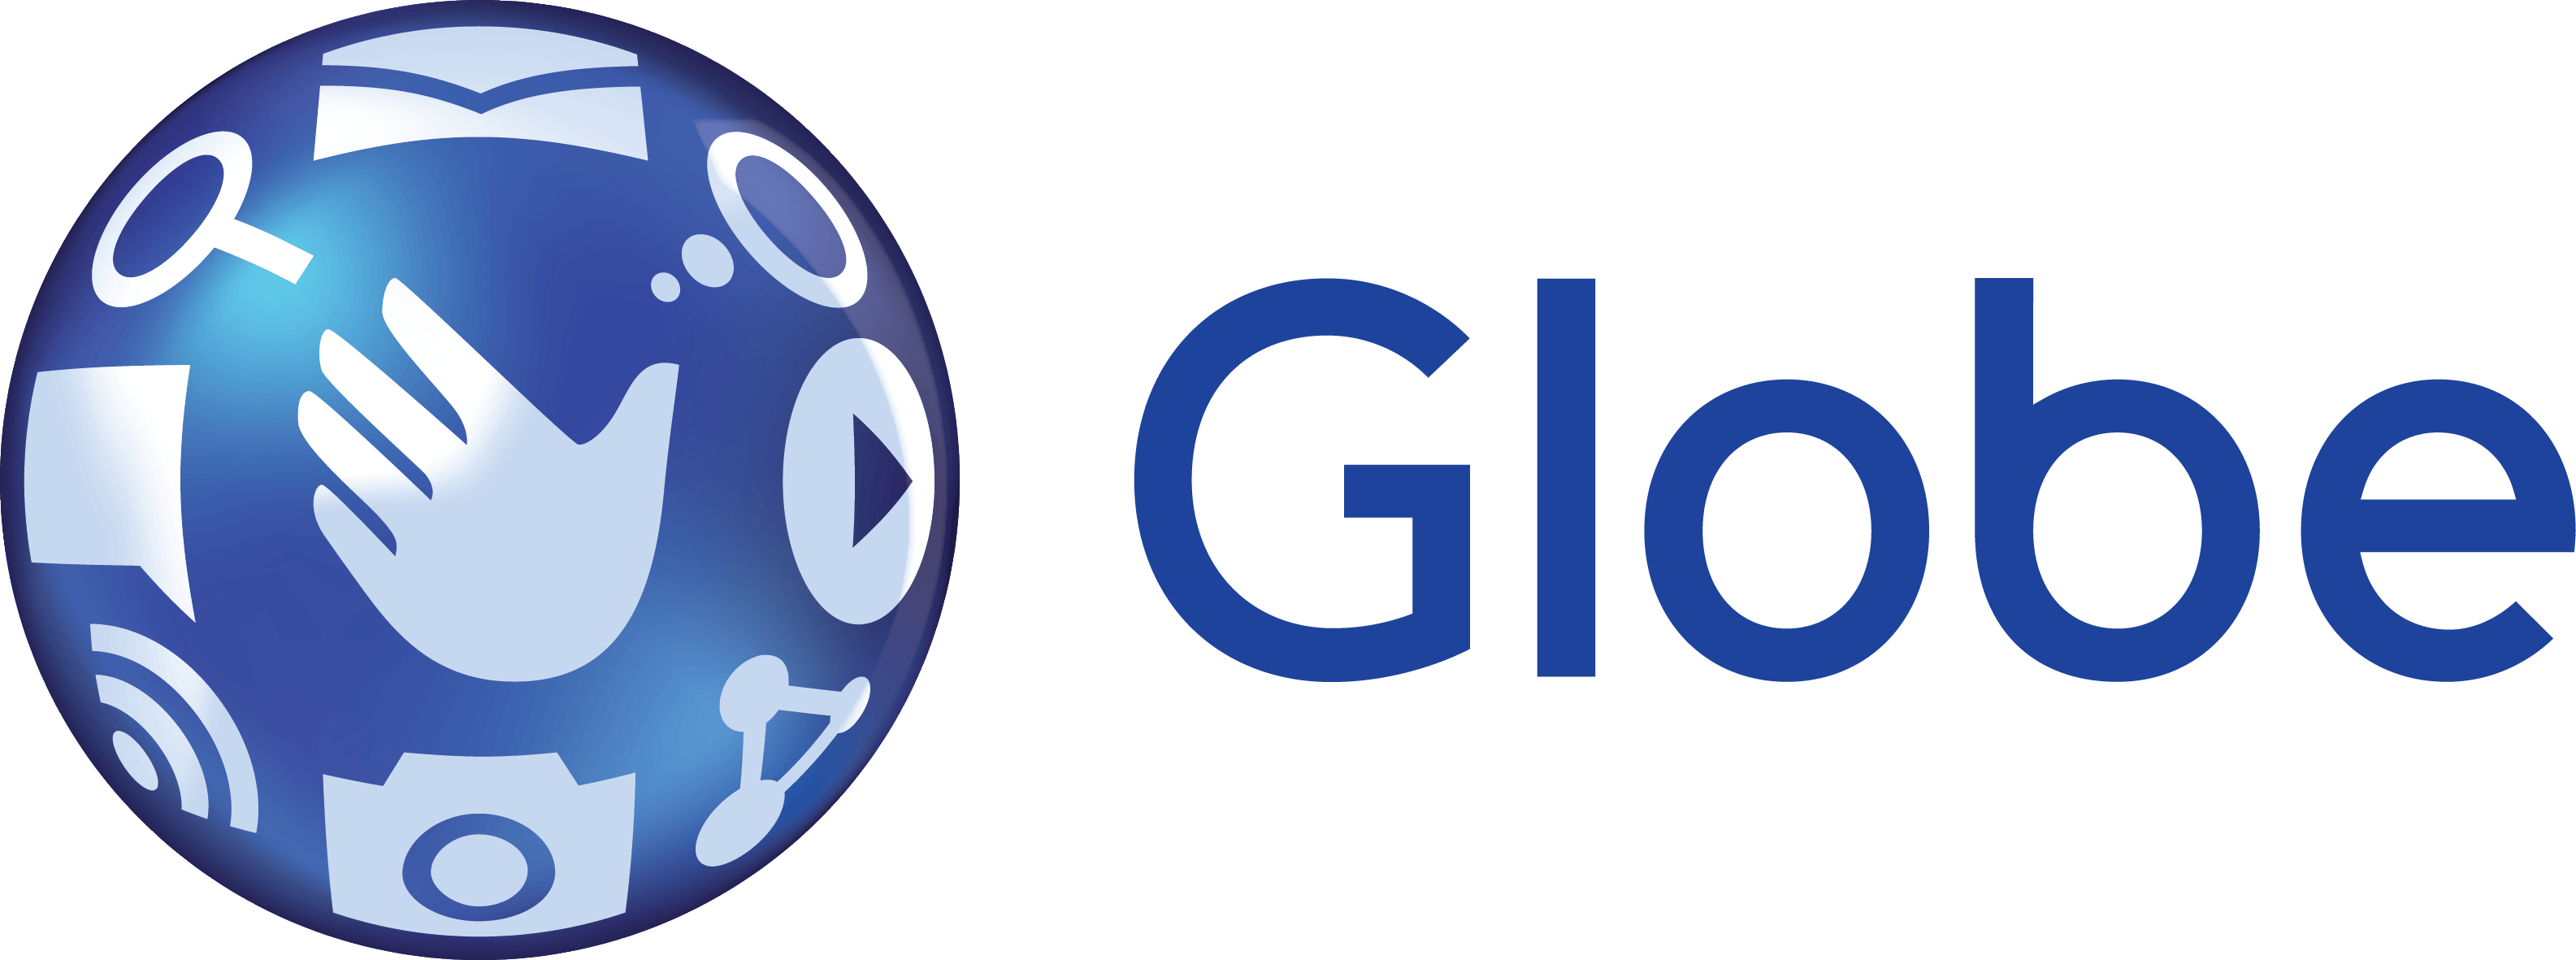 Facebook Globe Logo - Globe, Facebook collaborate to promote Digital Thumbprint Program ...